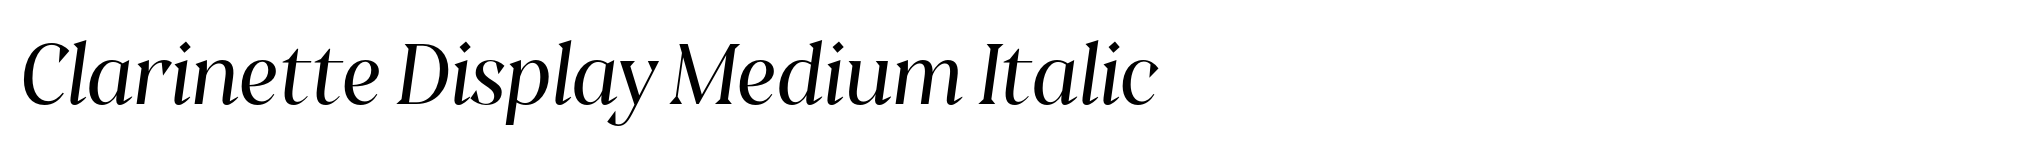 Clarinette Display Medium Italic image